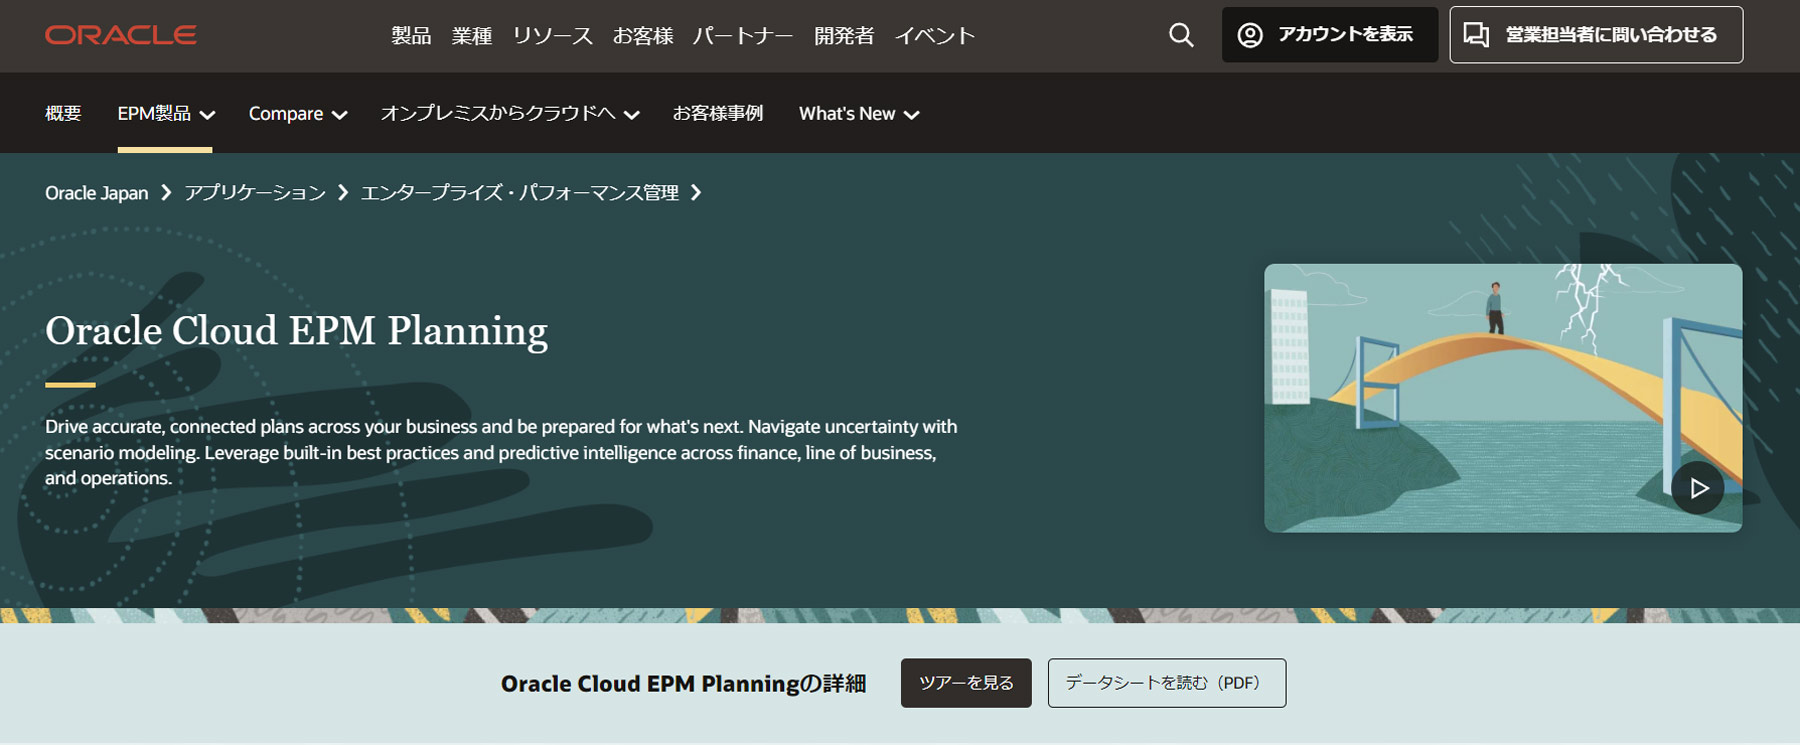 Oracle Cloud EPM Planning公式Webサイト